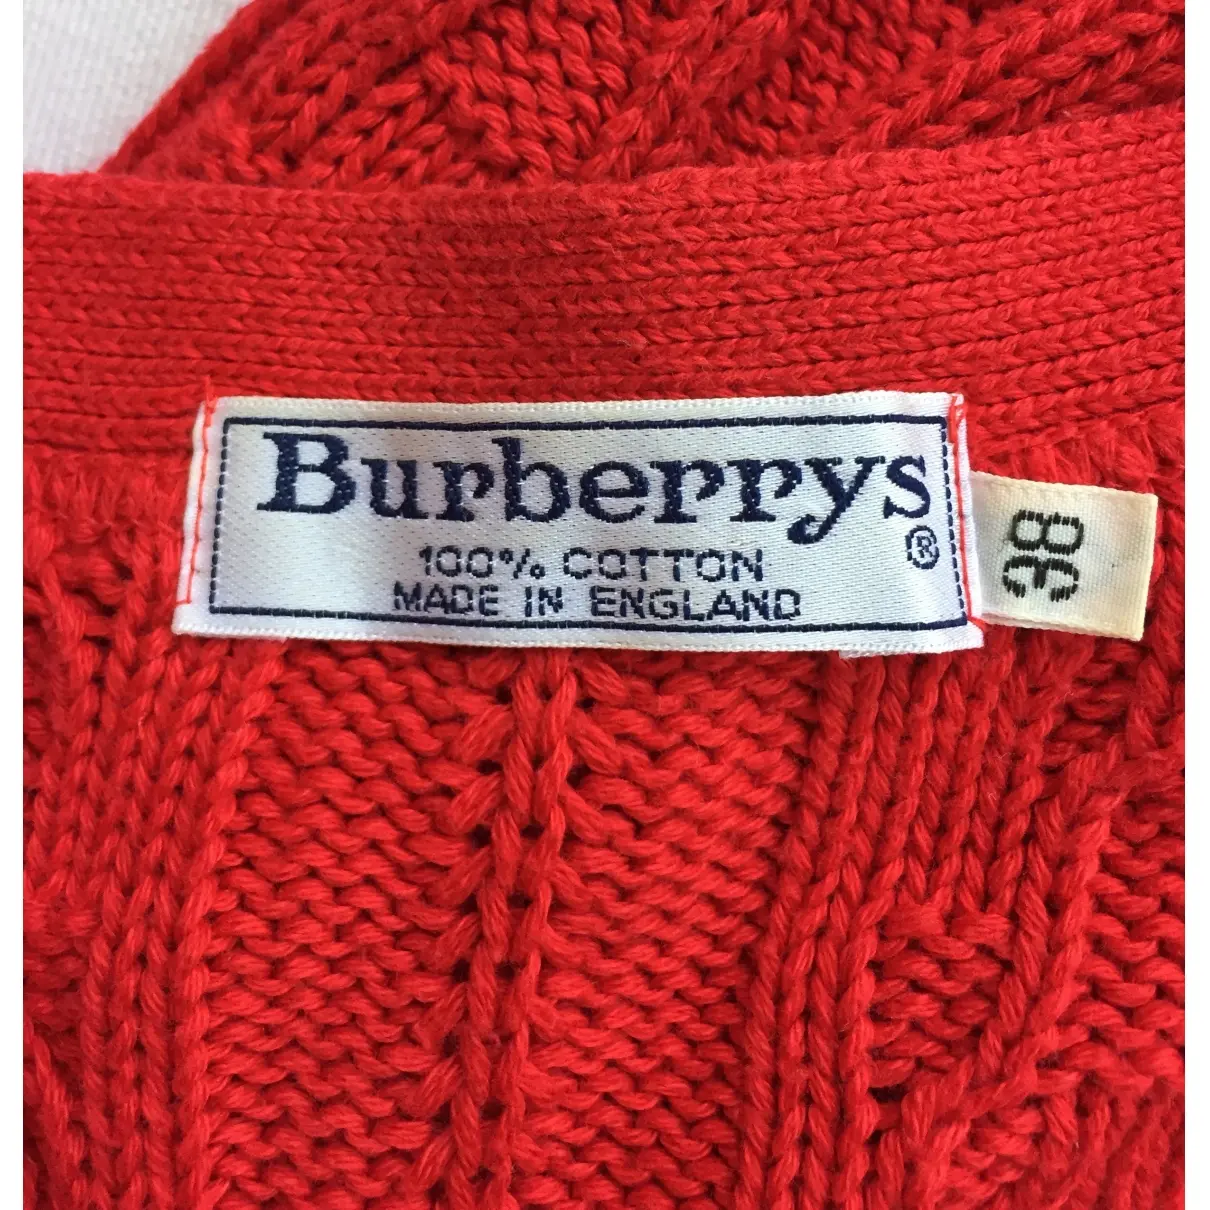 Buy Burberry Cardigan online - Vintage